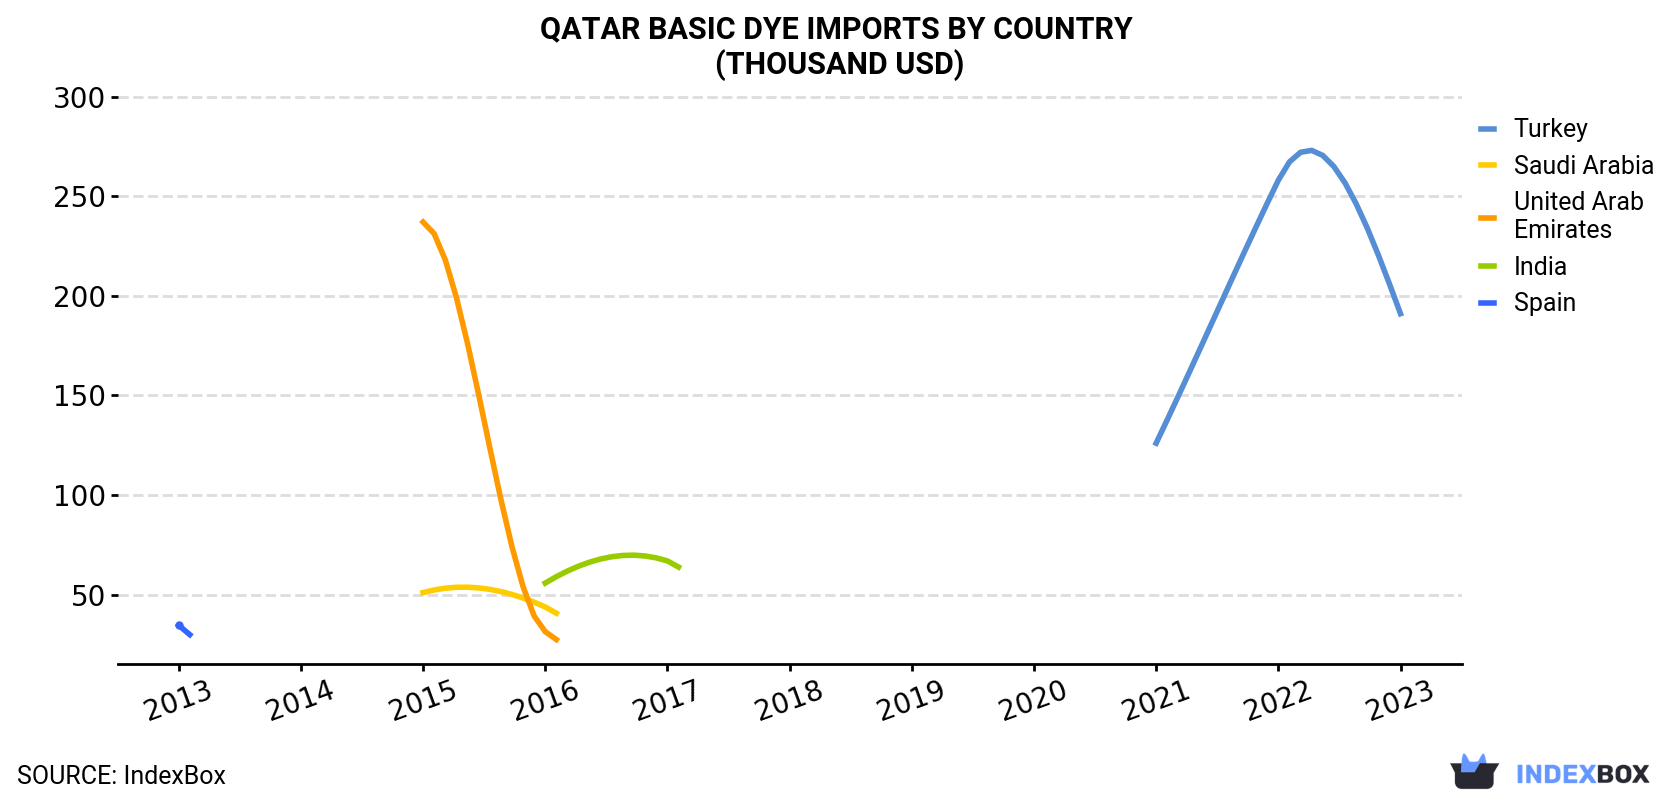 Qatar Basic Dye Imports By Country (Thousand USD)